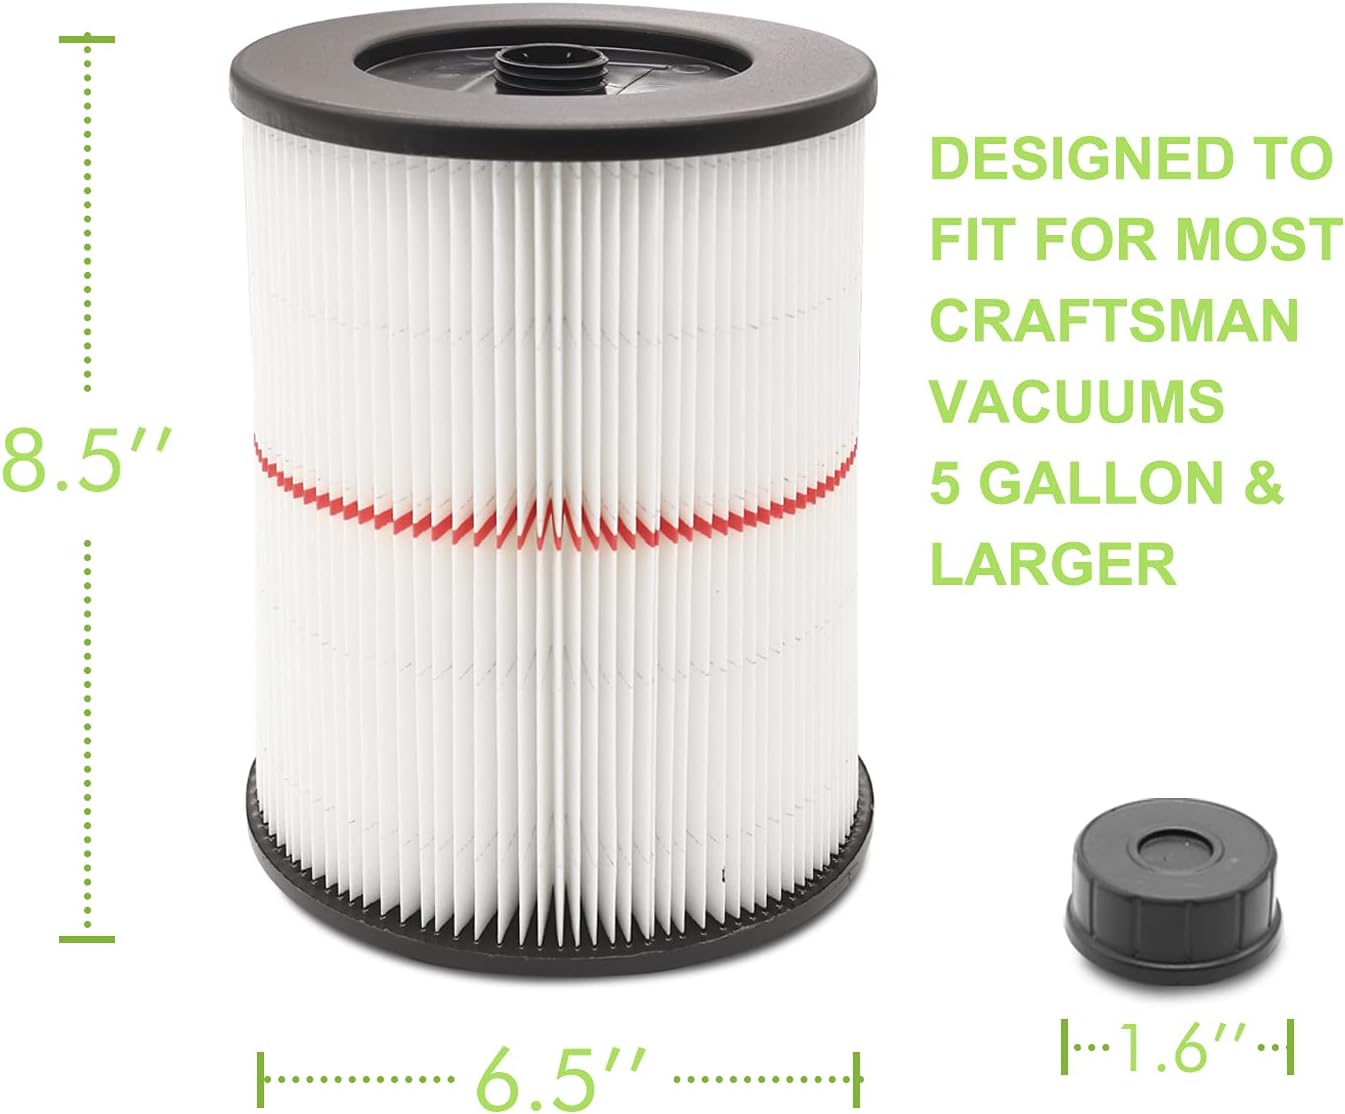 MZY LLC 17816 Filter for Craftsman Shop Vac Air Filter, Replacement for Craftsman Wet Dry vac Filter for Craftsman 9-17816 Vacuum Filte